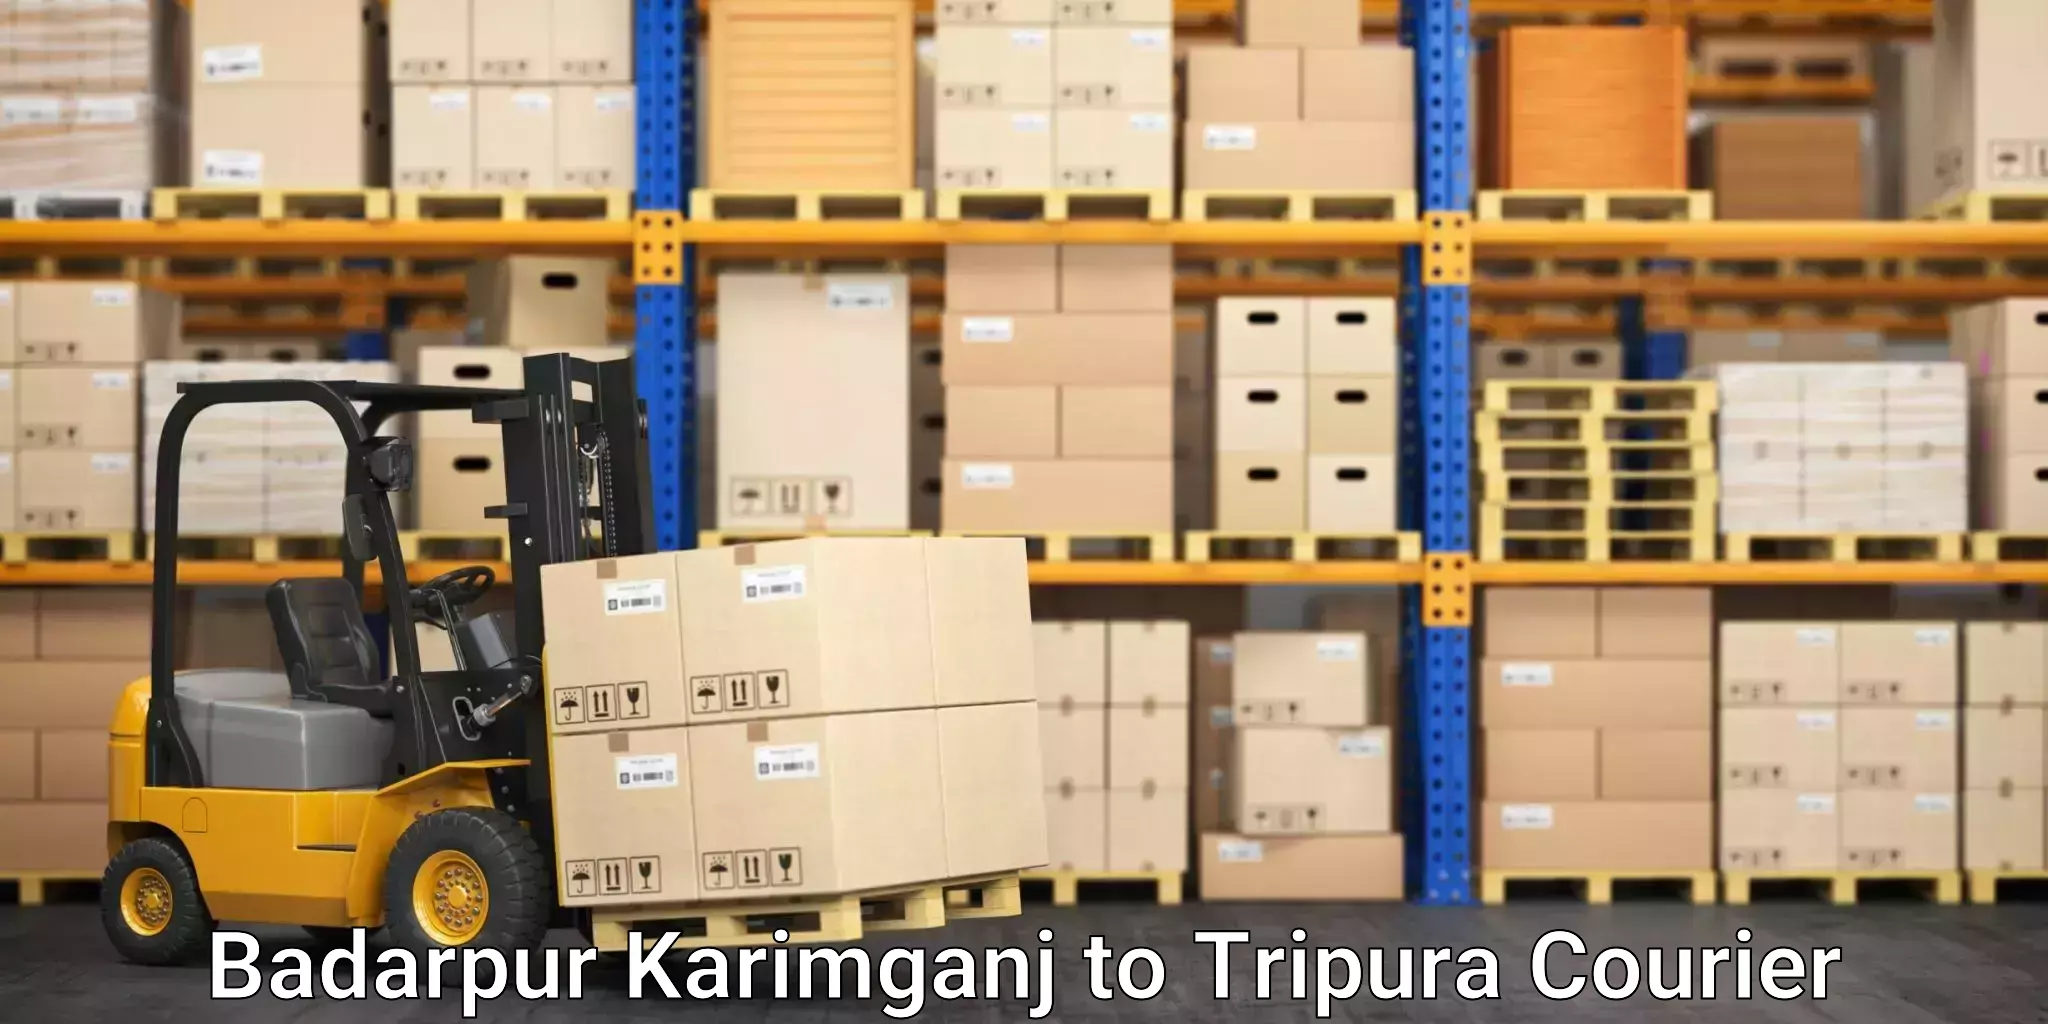 Reliable parcel services Badarpur Karimganj to Tripura